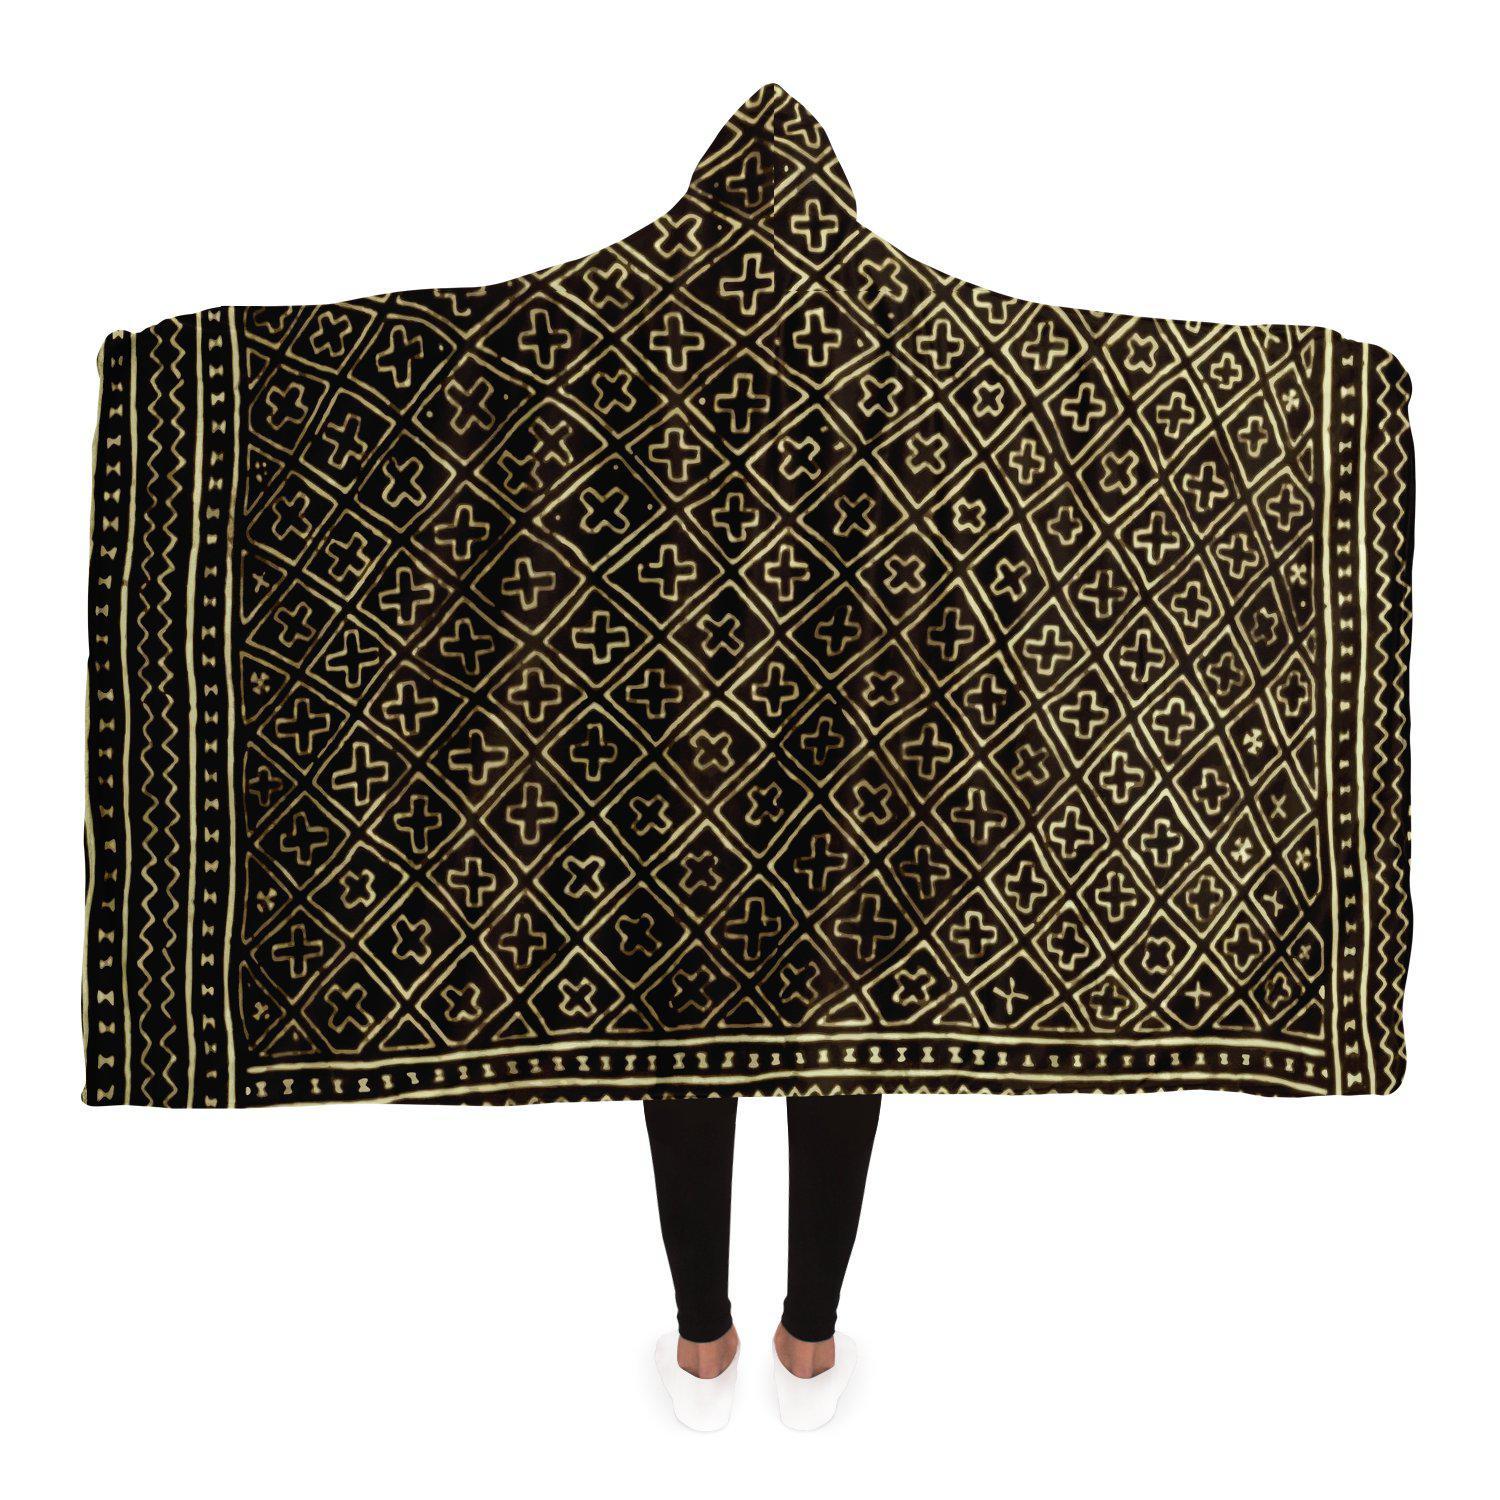 Hooded Blanket - AOP Adult / Premium Sherpa Hooded Blanket, Mali Mudcloth African Inspired